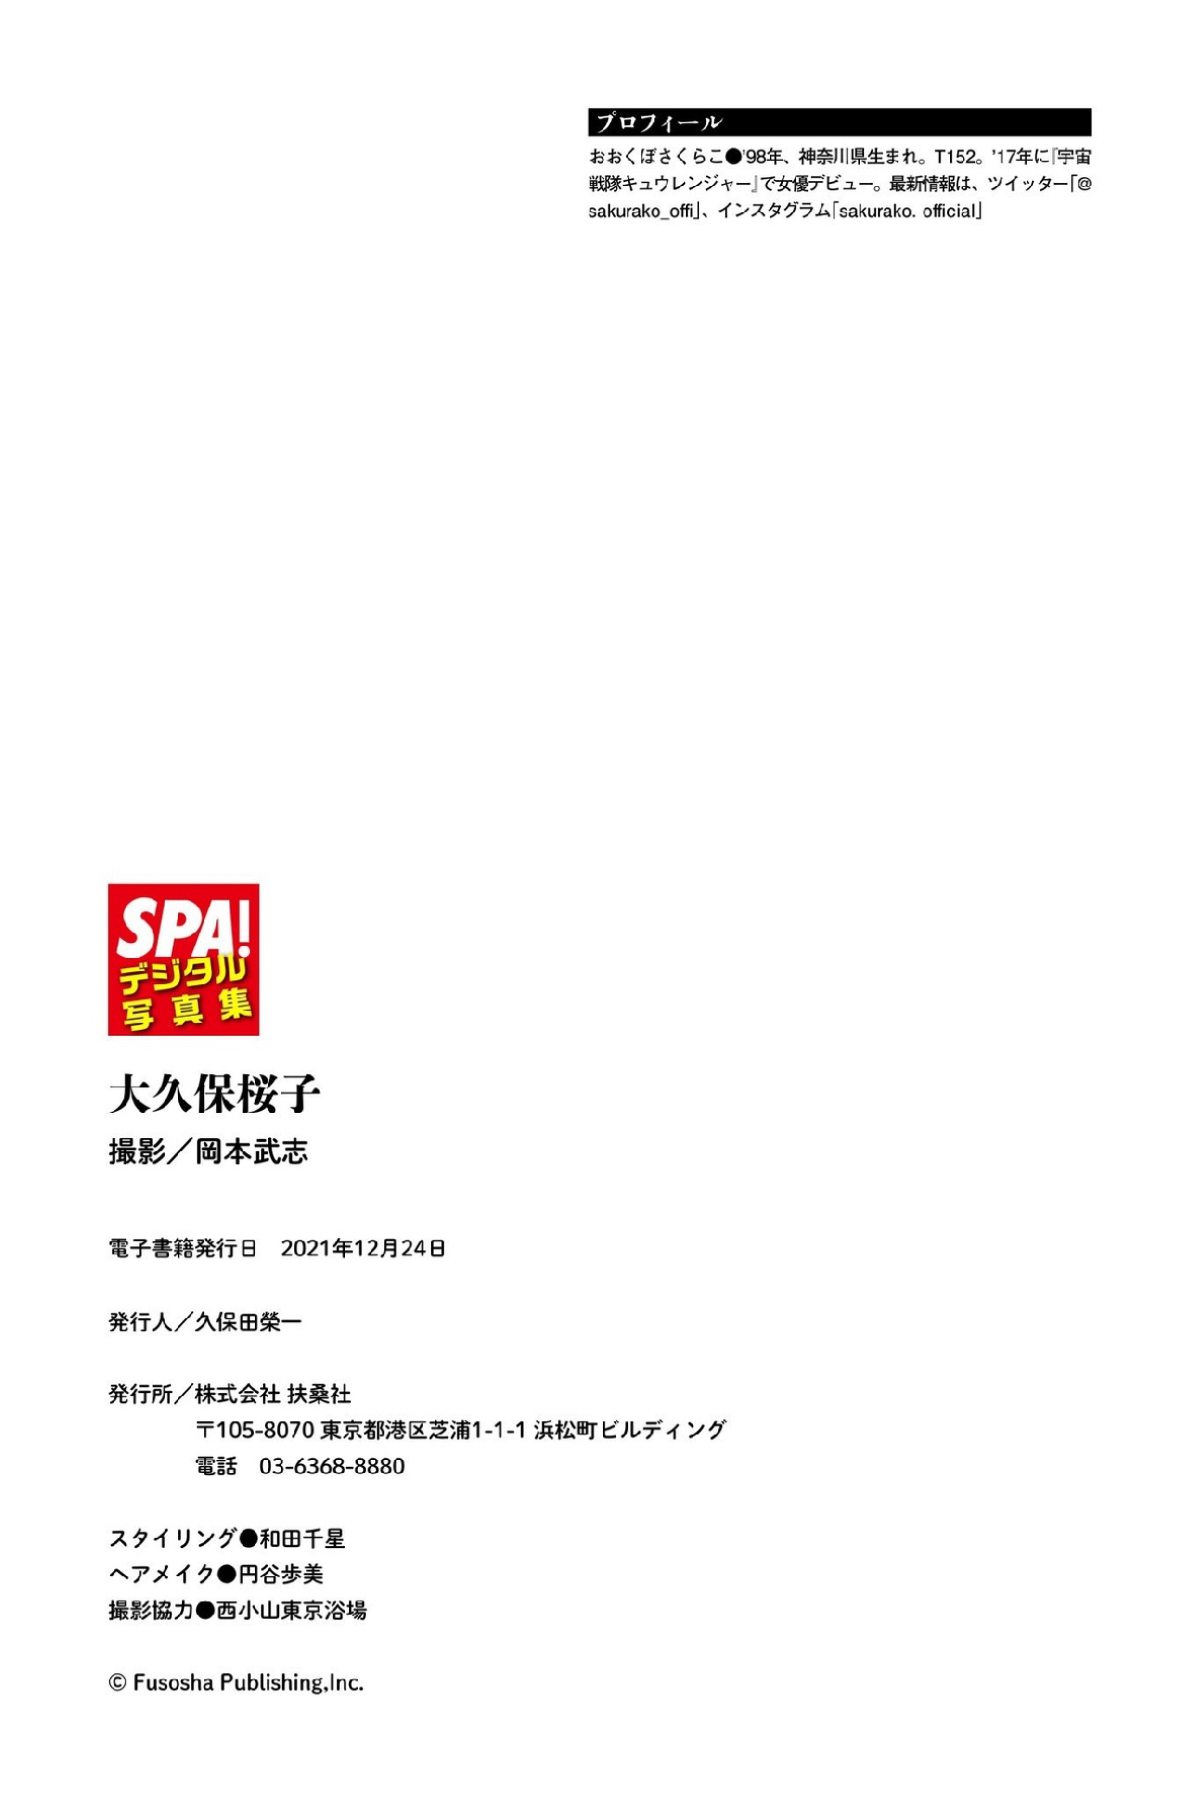 SPA Photobook 2021 12 21 Sakurako Okubo 大久保桜子 Nice upset 素敵な番狂わせ 0050 0457534210.jpg